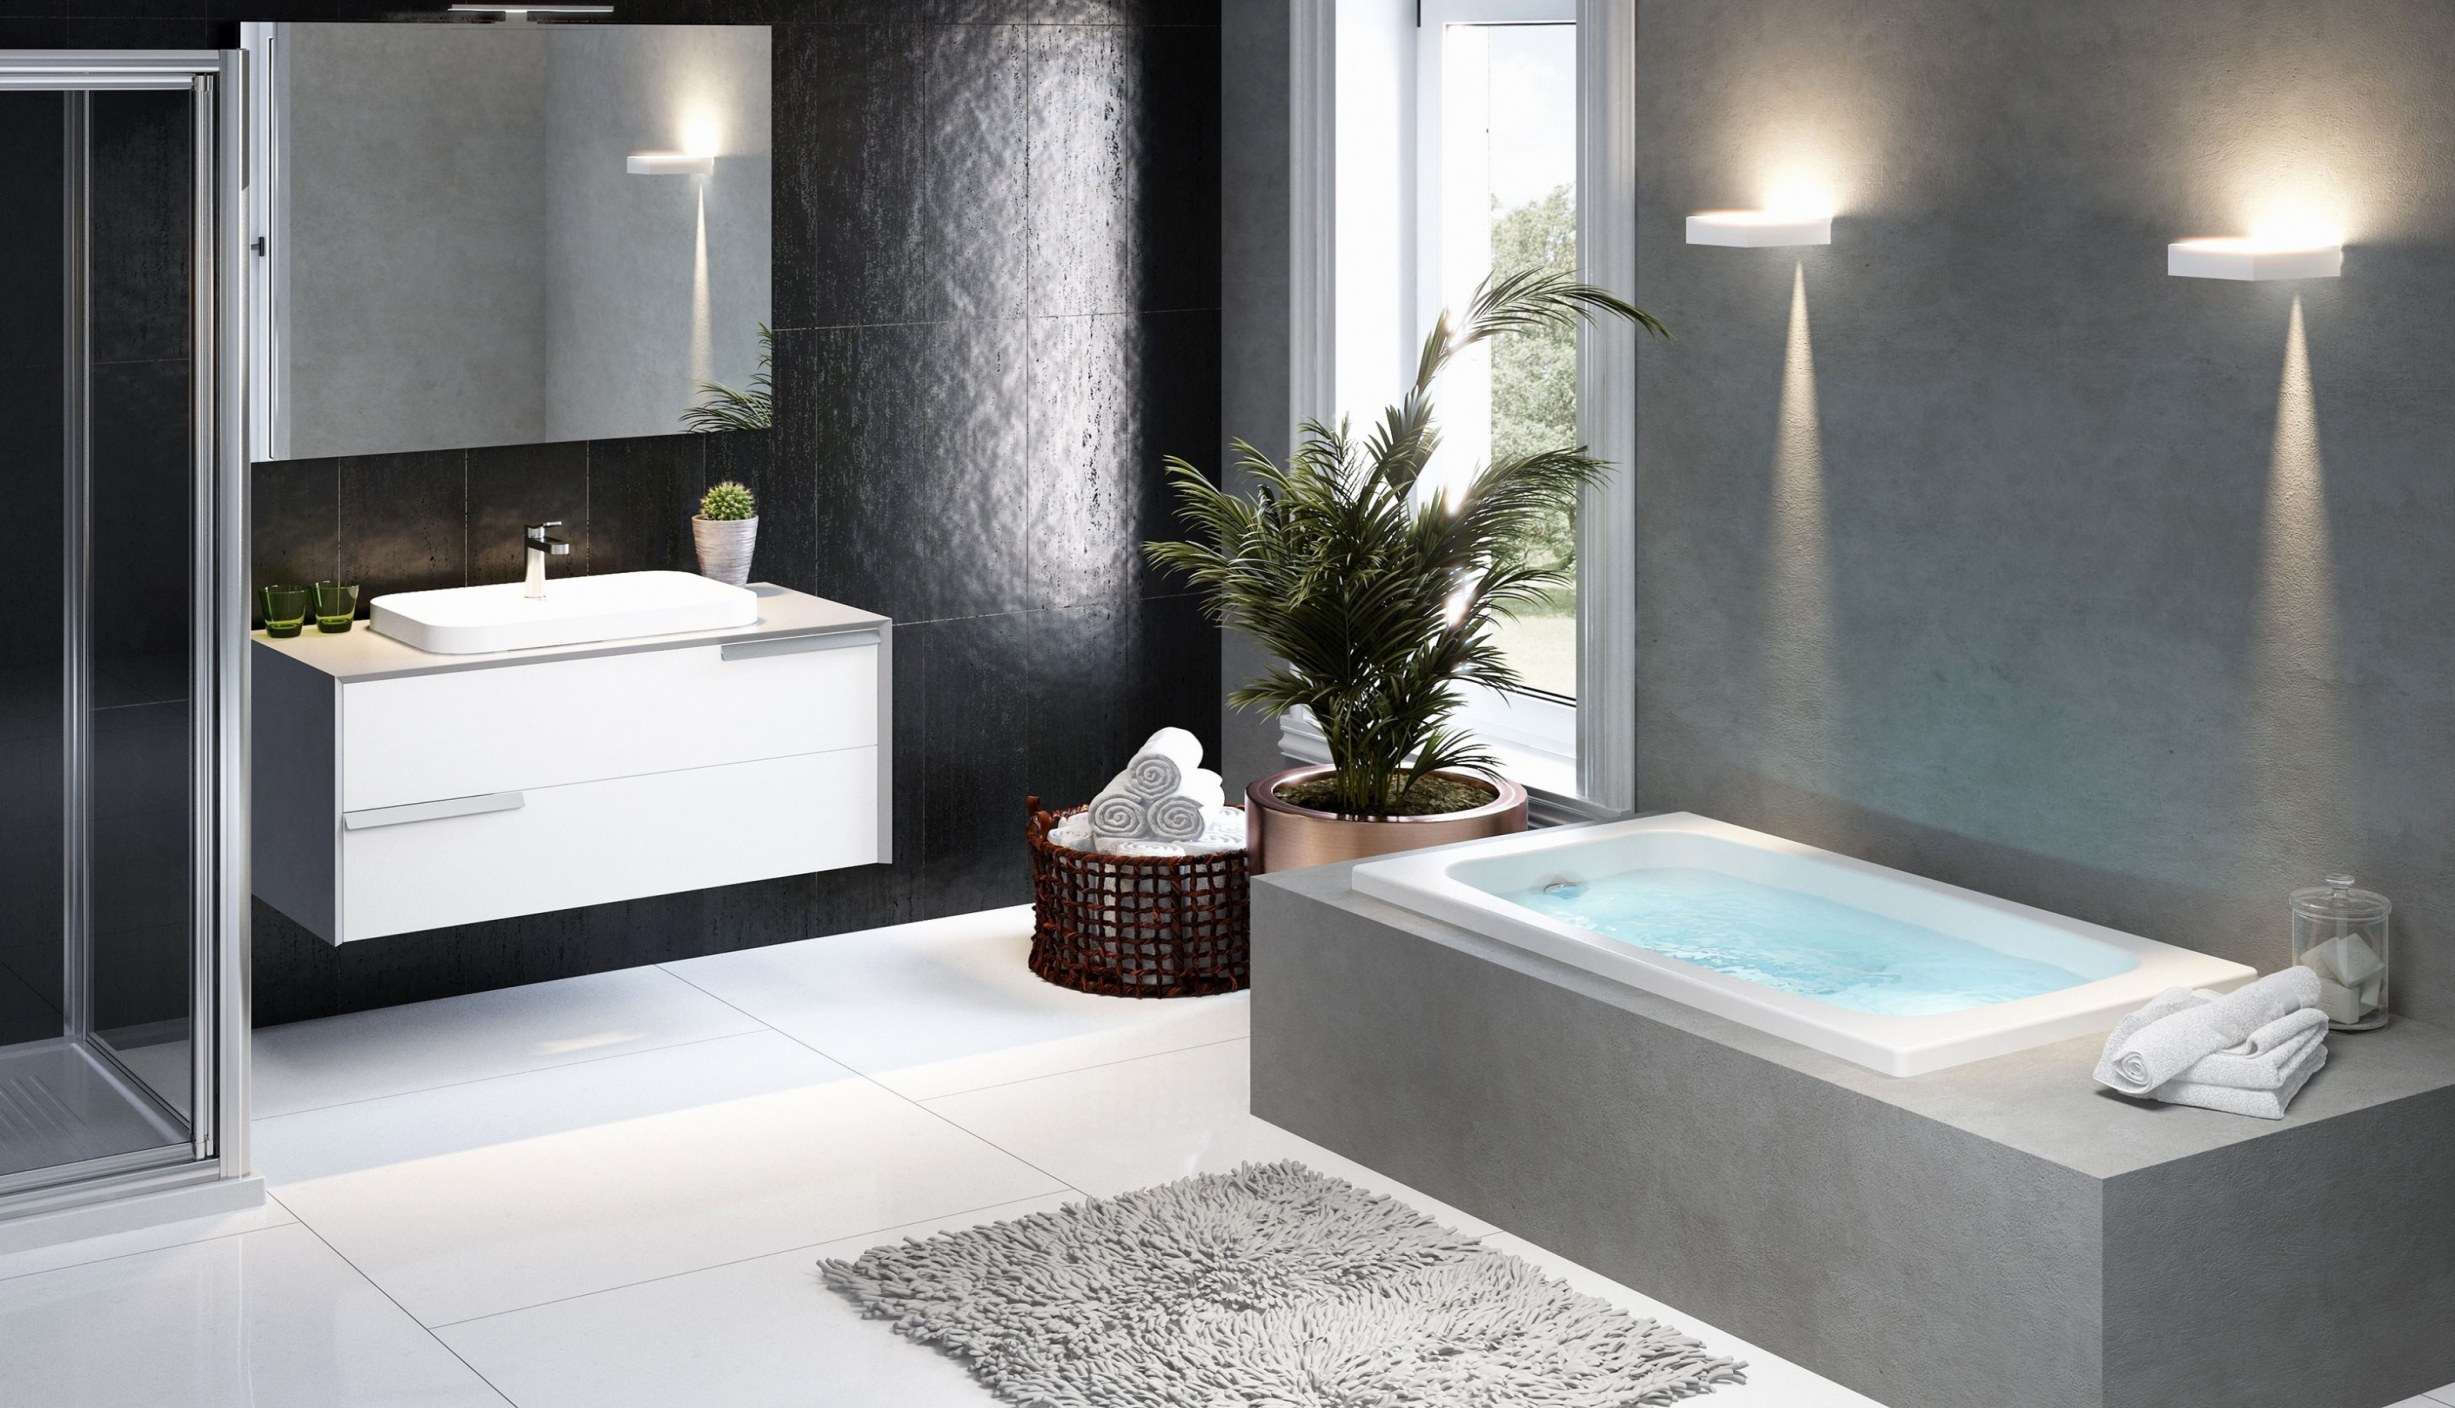 White Brick Backsplash Kitchen Best Of Small Bathroom Designs New Small Bathroom Lighting Fresh Tag